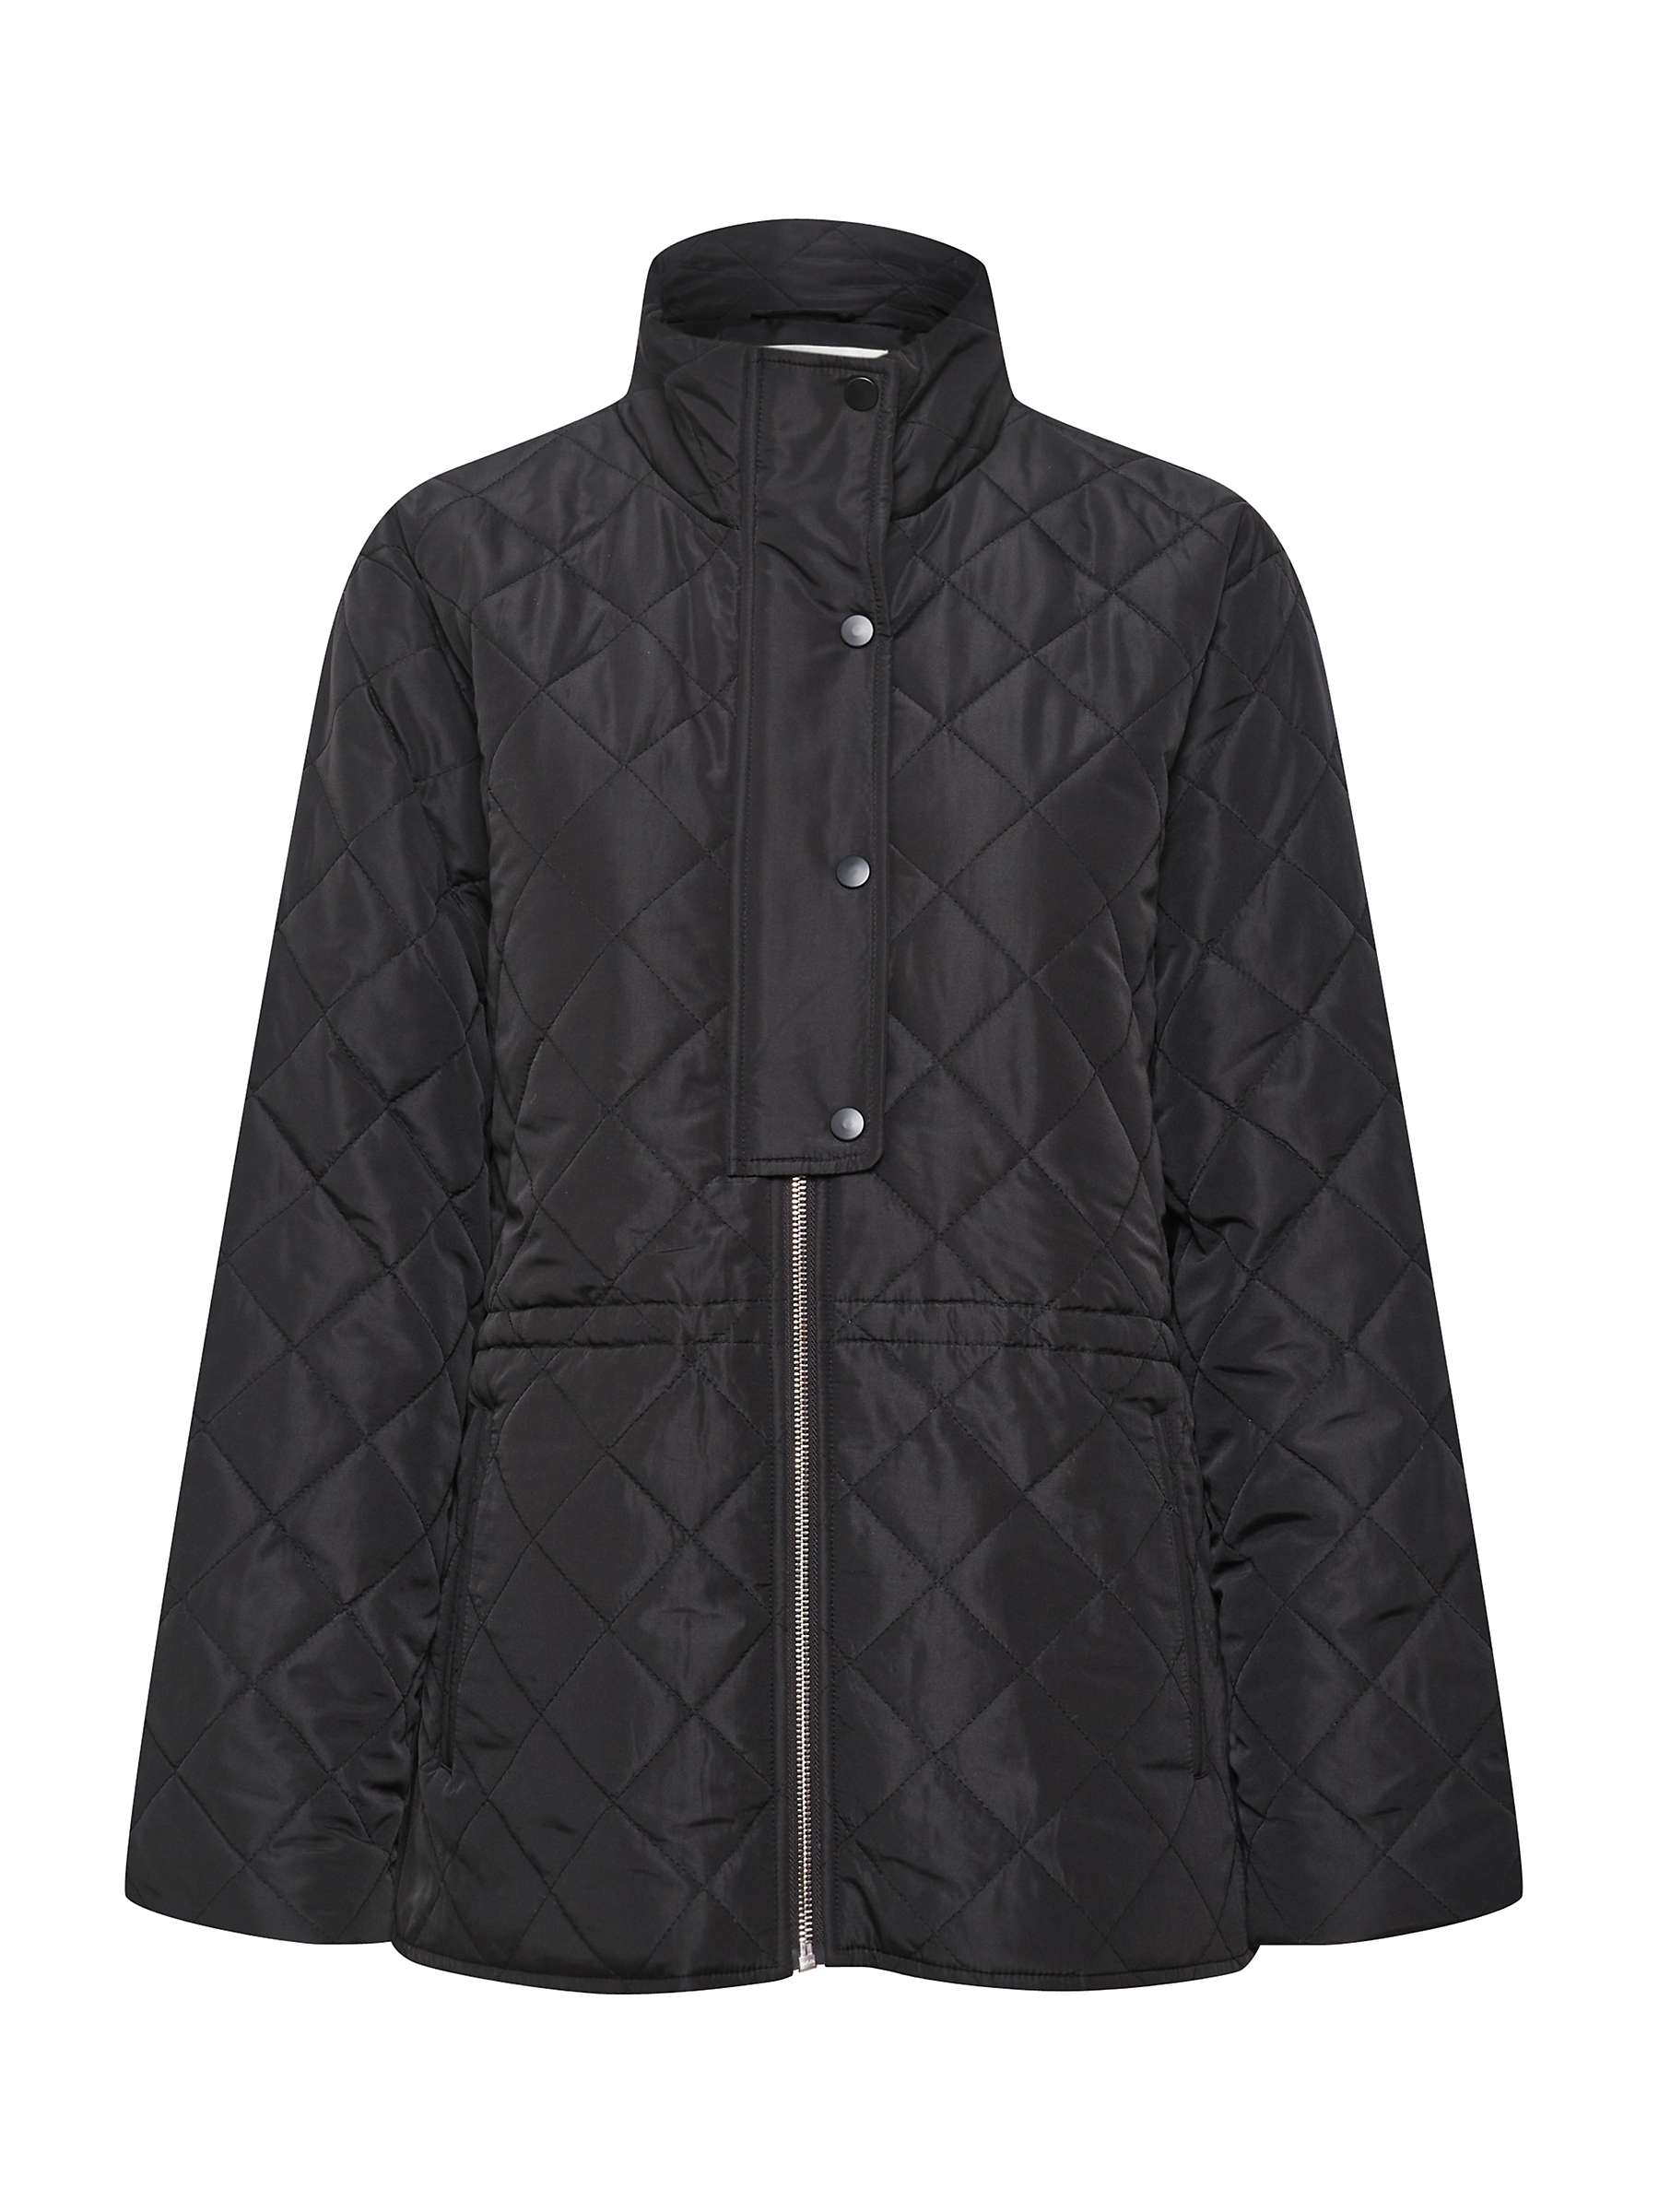 InWear Mopa Long Sleeve Quilted Jacket, Black at John Lewis & Partners